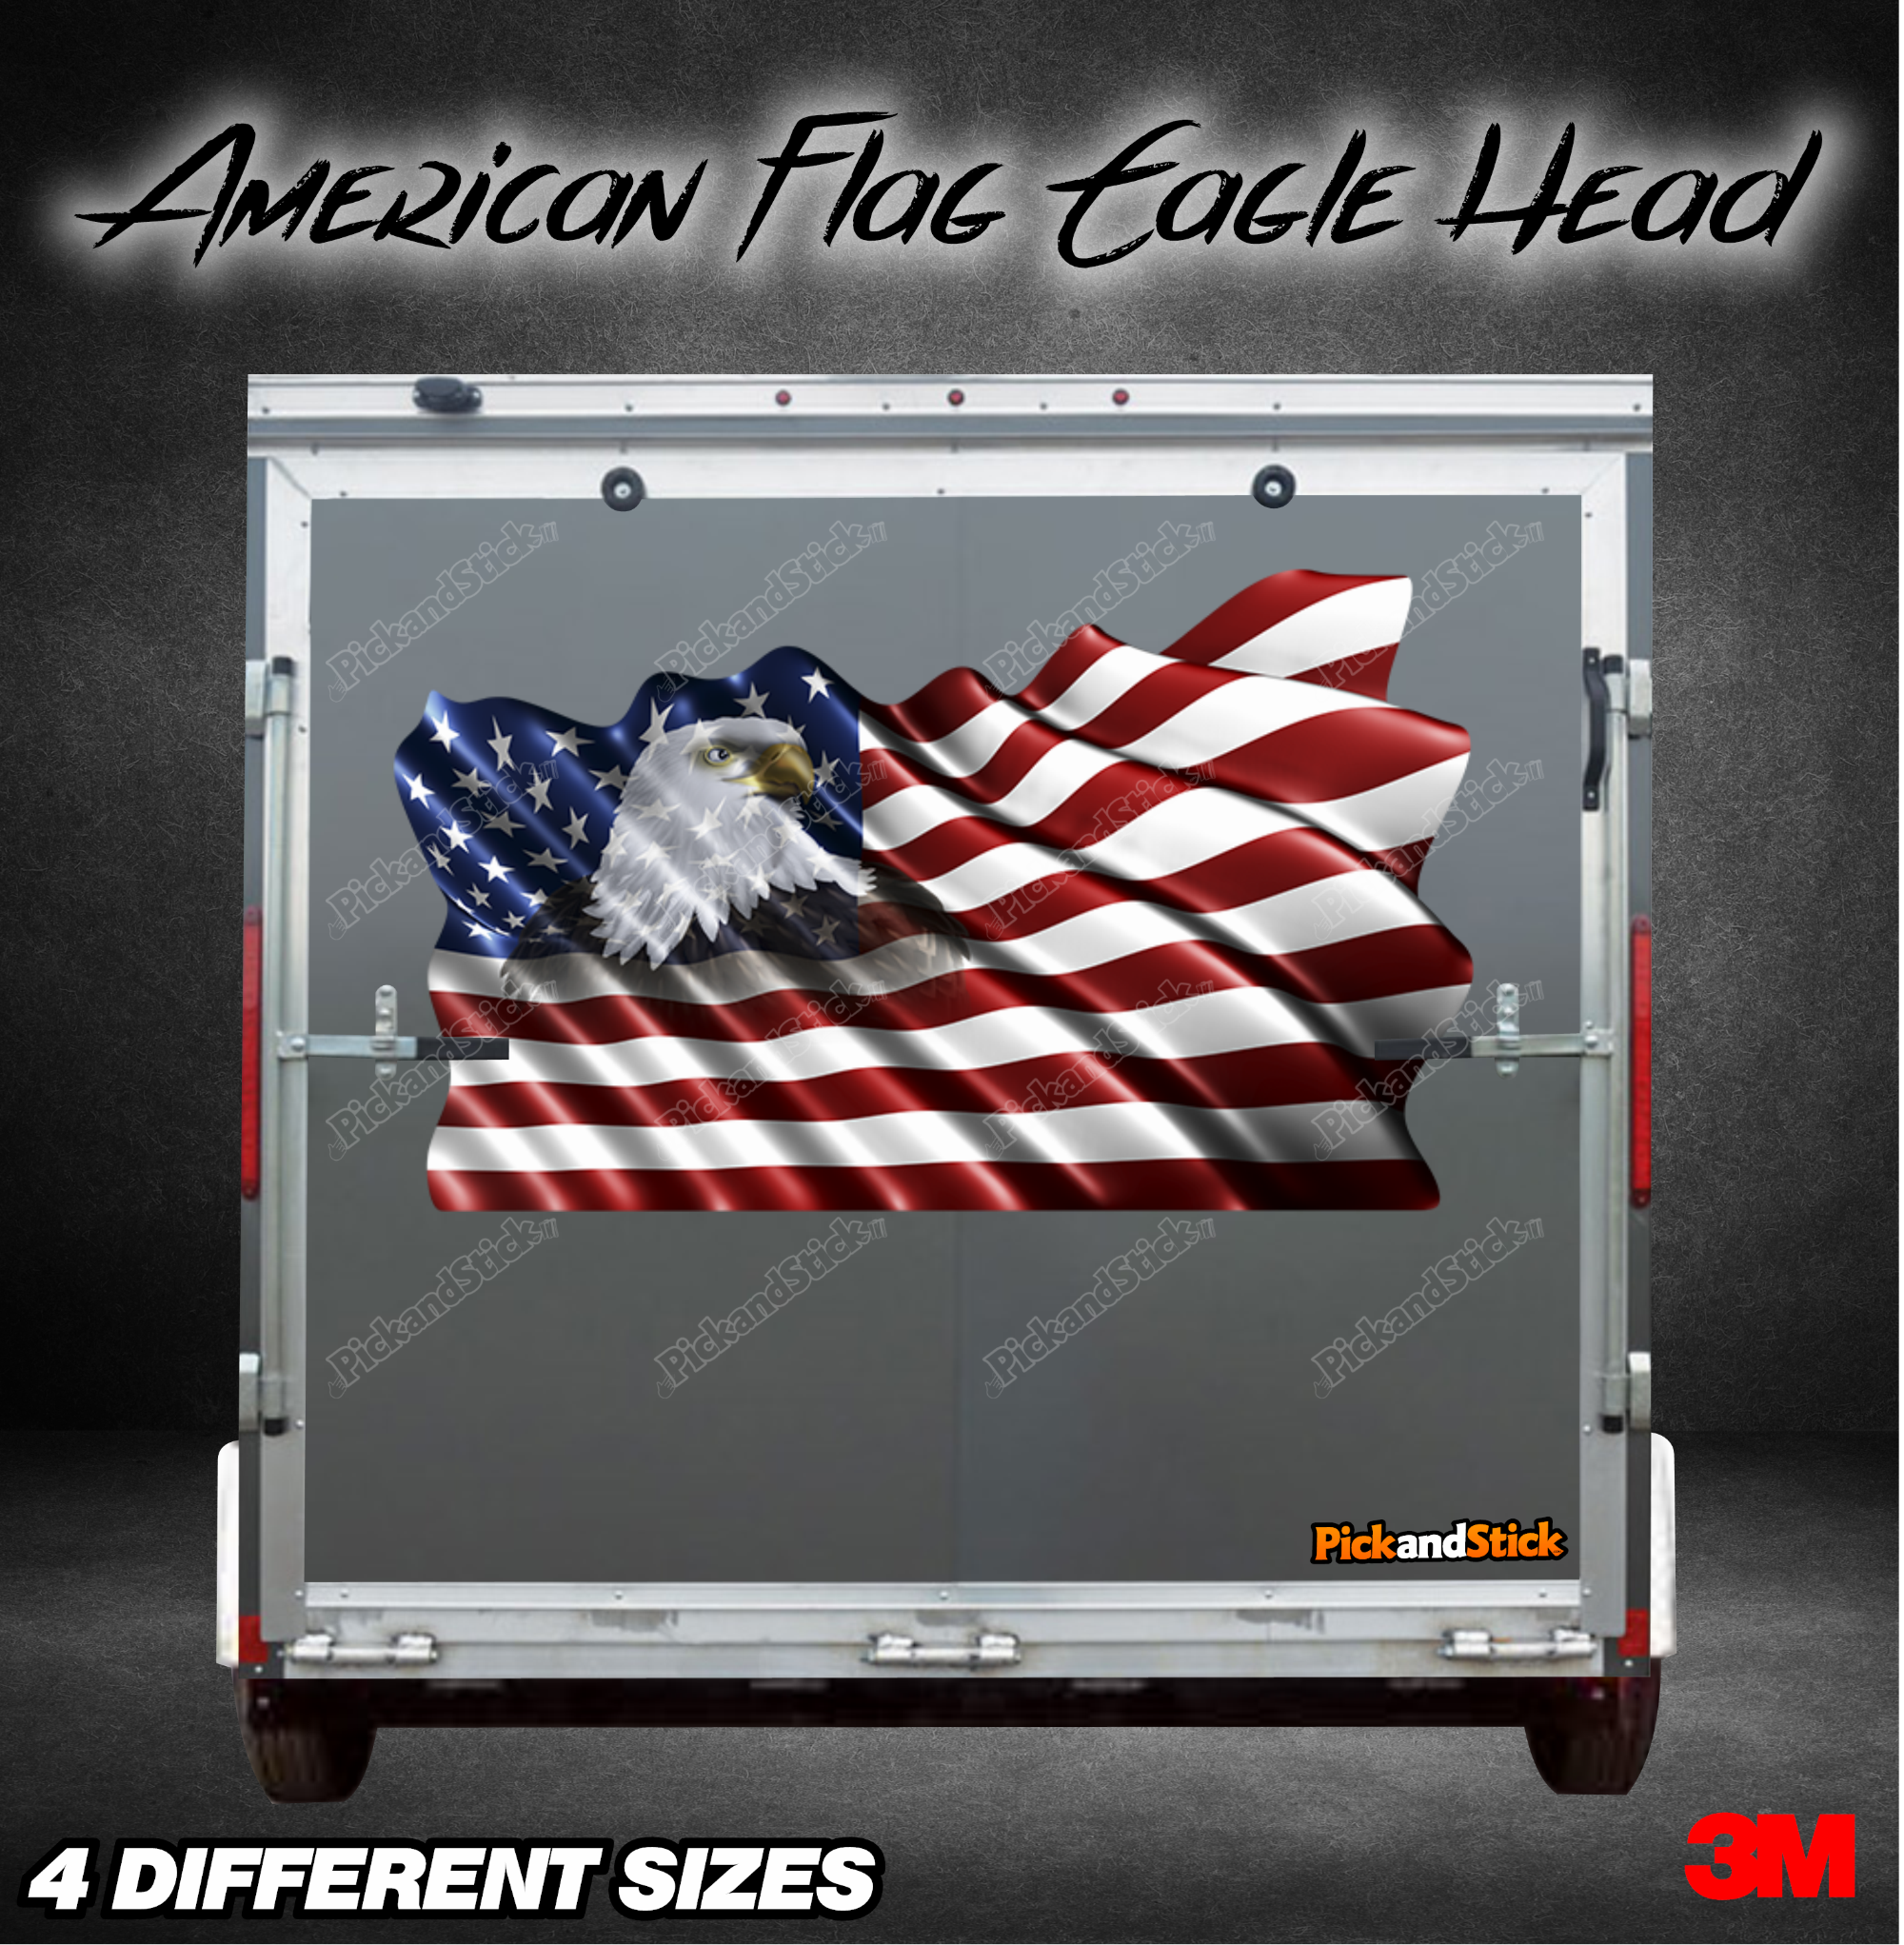 American Flag Eagle Head Graphic - PickandStickcom